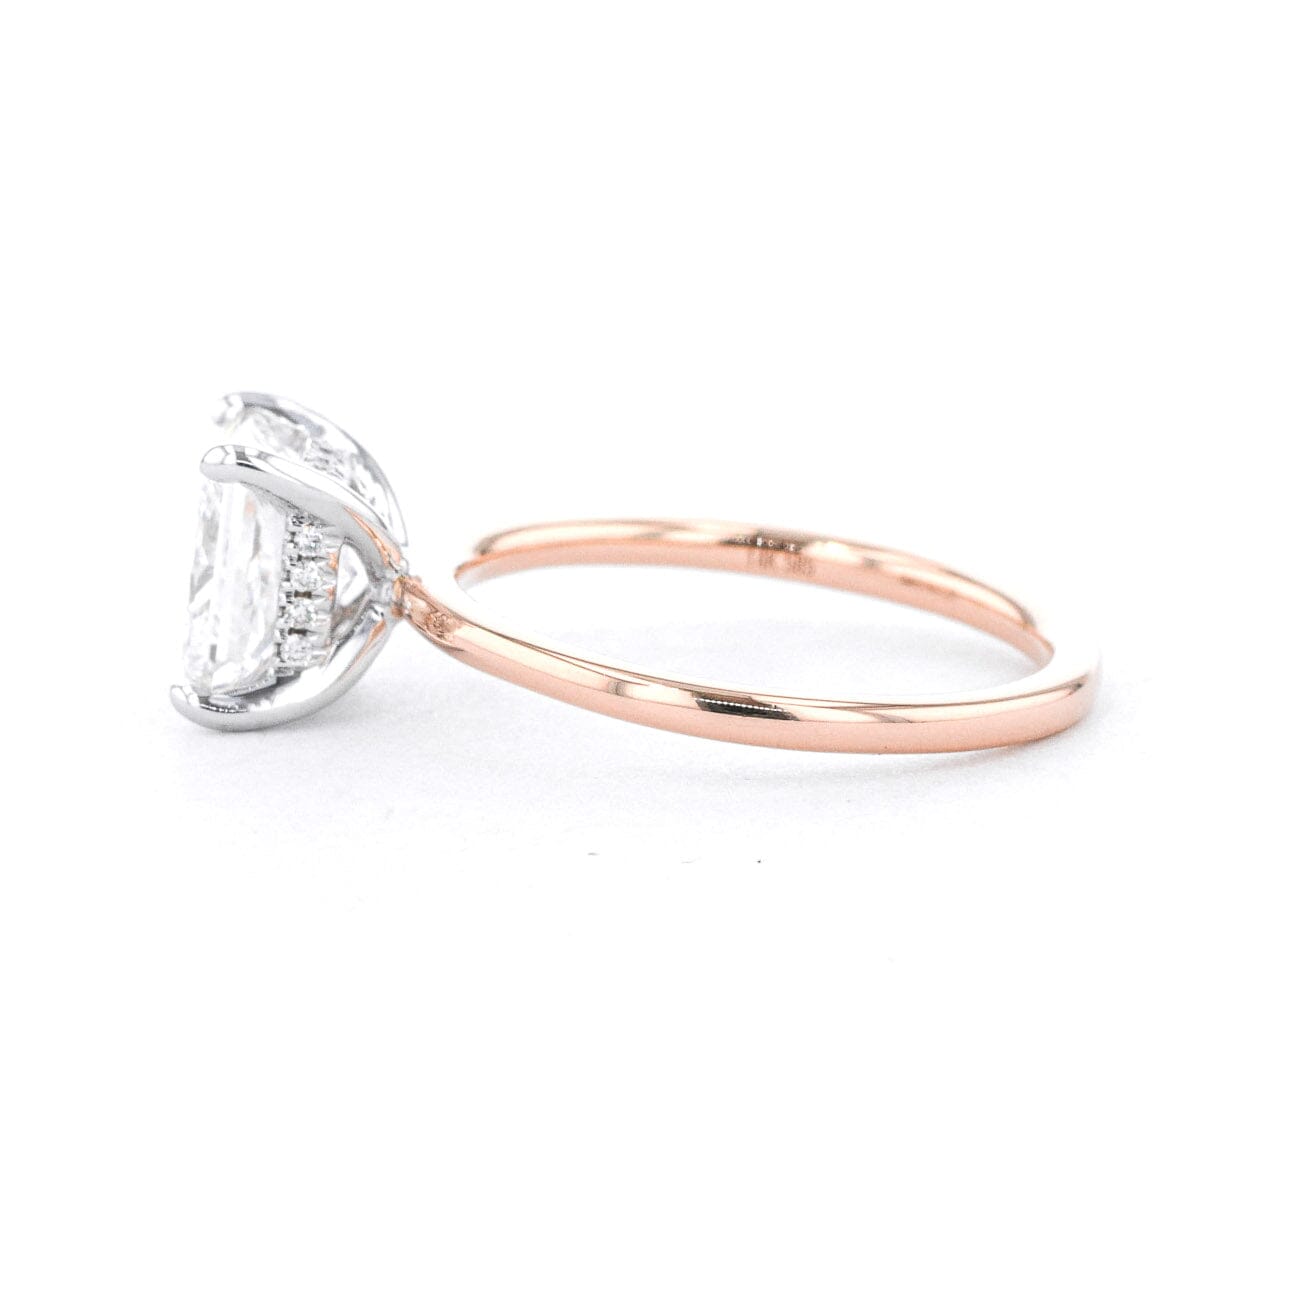 1.6mm Kayla Princess High Polish Engagement Rings Princess Bride Diamonds 